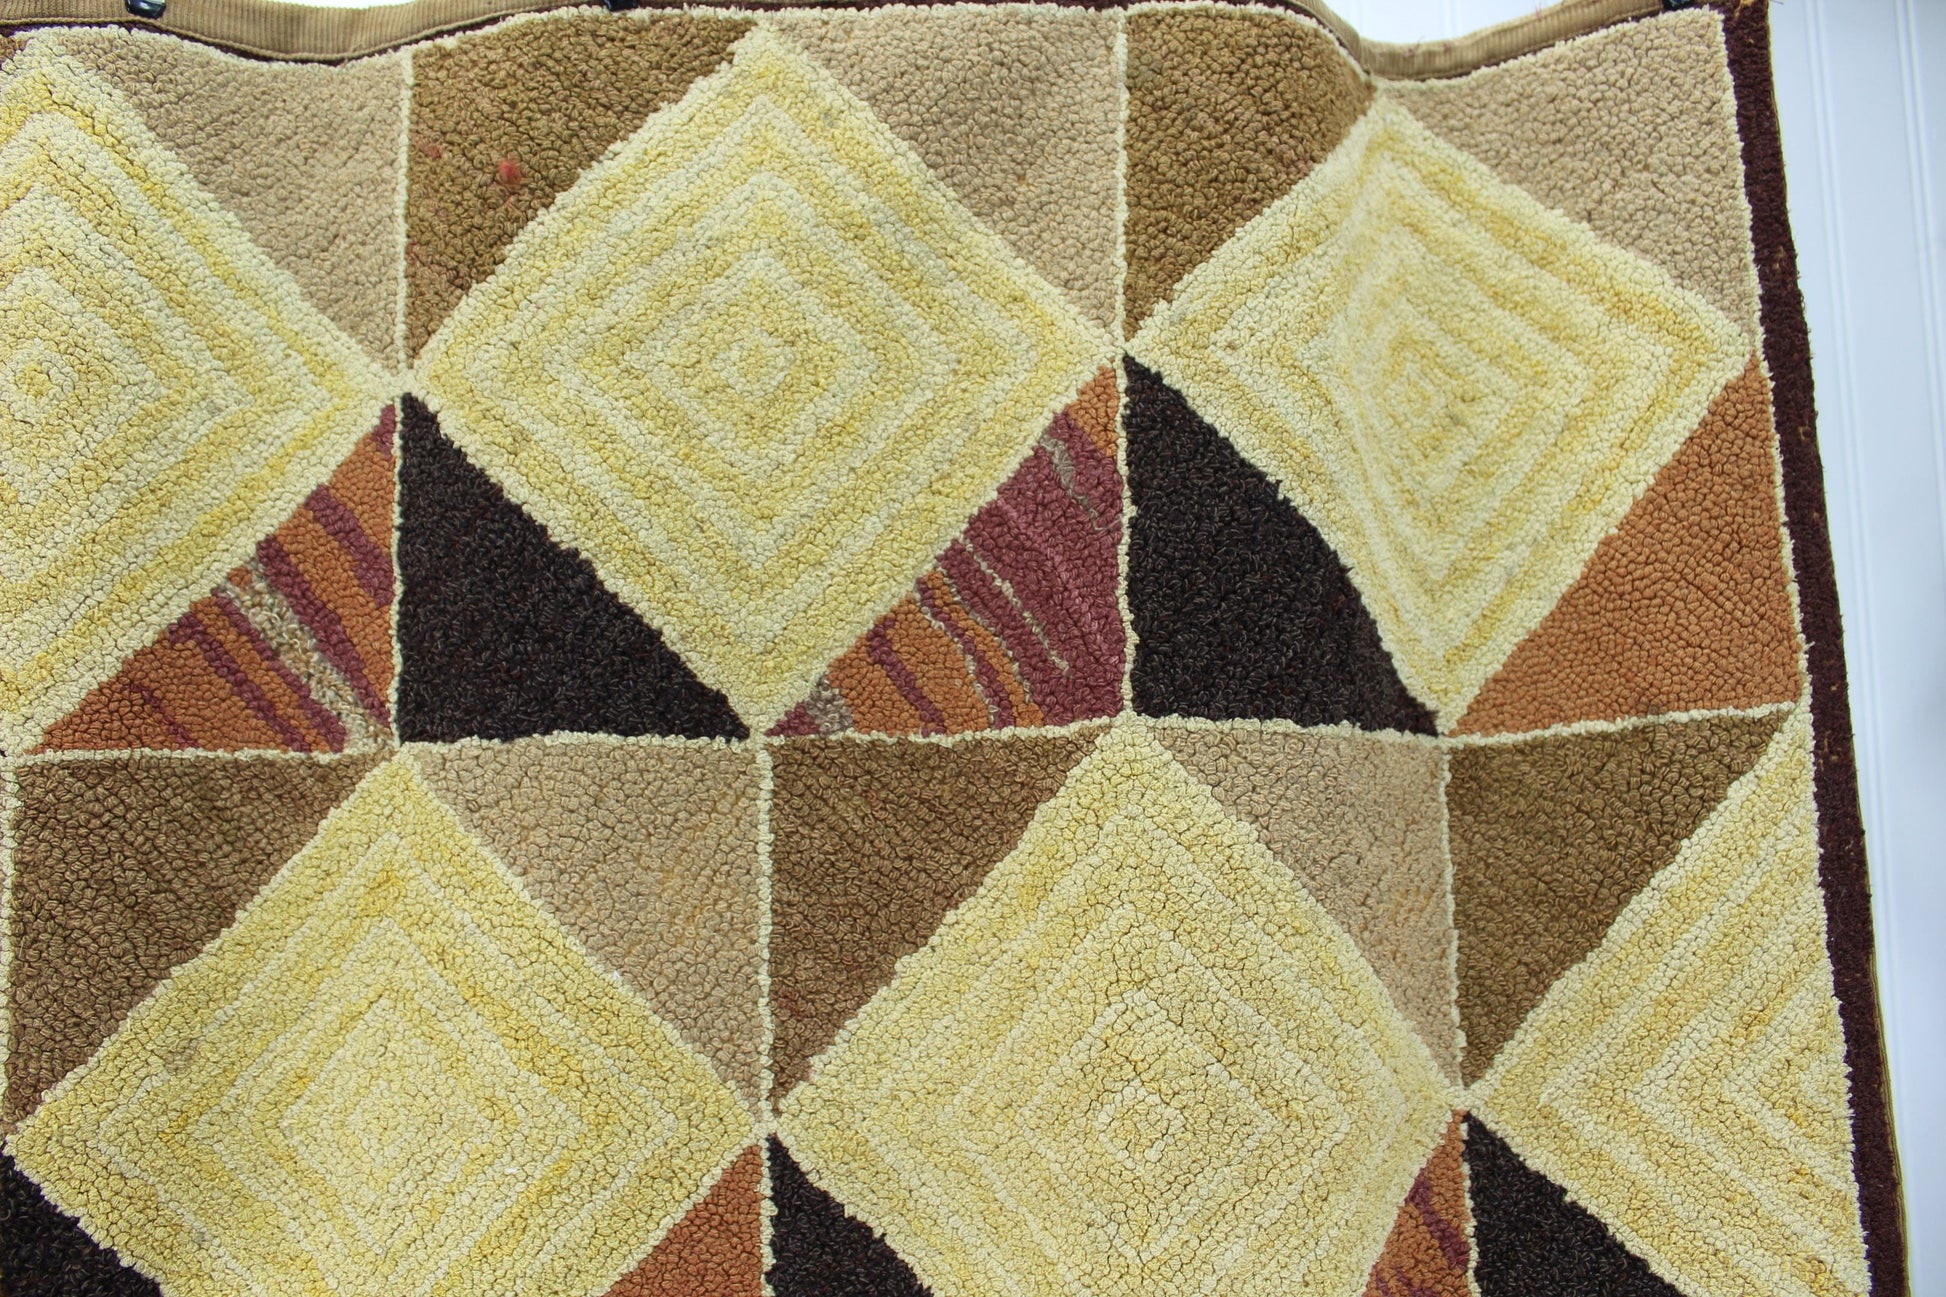 Vintage 1950s Hand Hooked Wool Rug - Tumbling Block Pattern - Mid Century Provenance great on any type floor